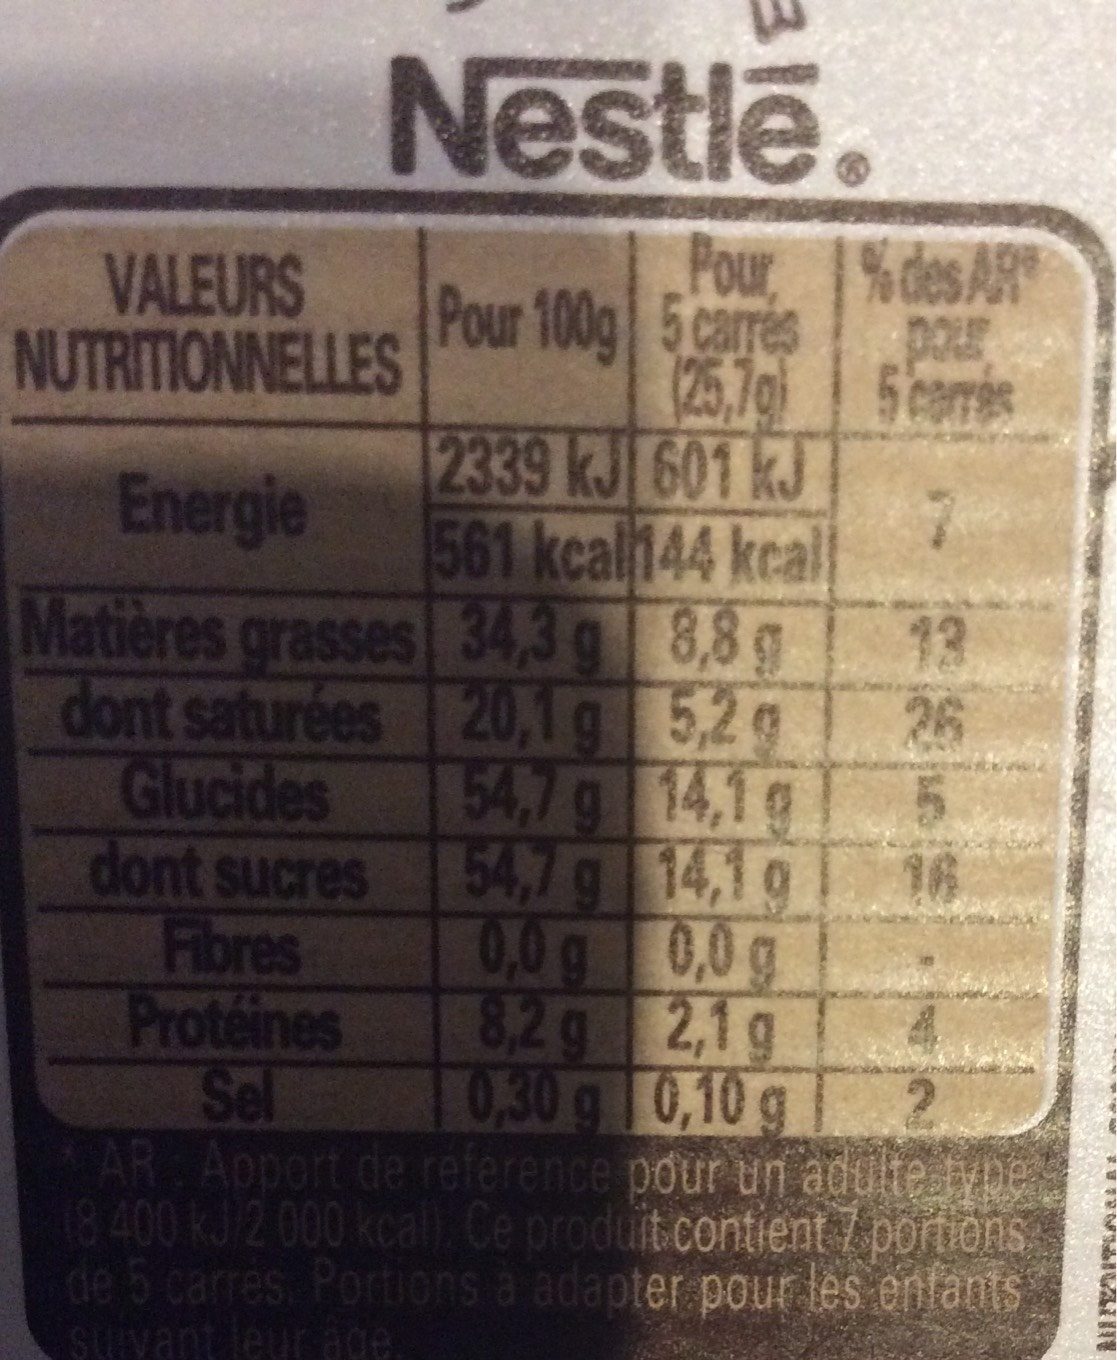 NESTLE DESSERT Blanc 2 x 180g - Nutrition facts - fr